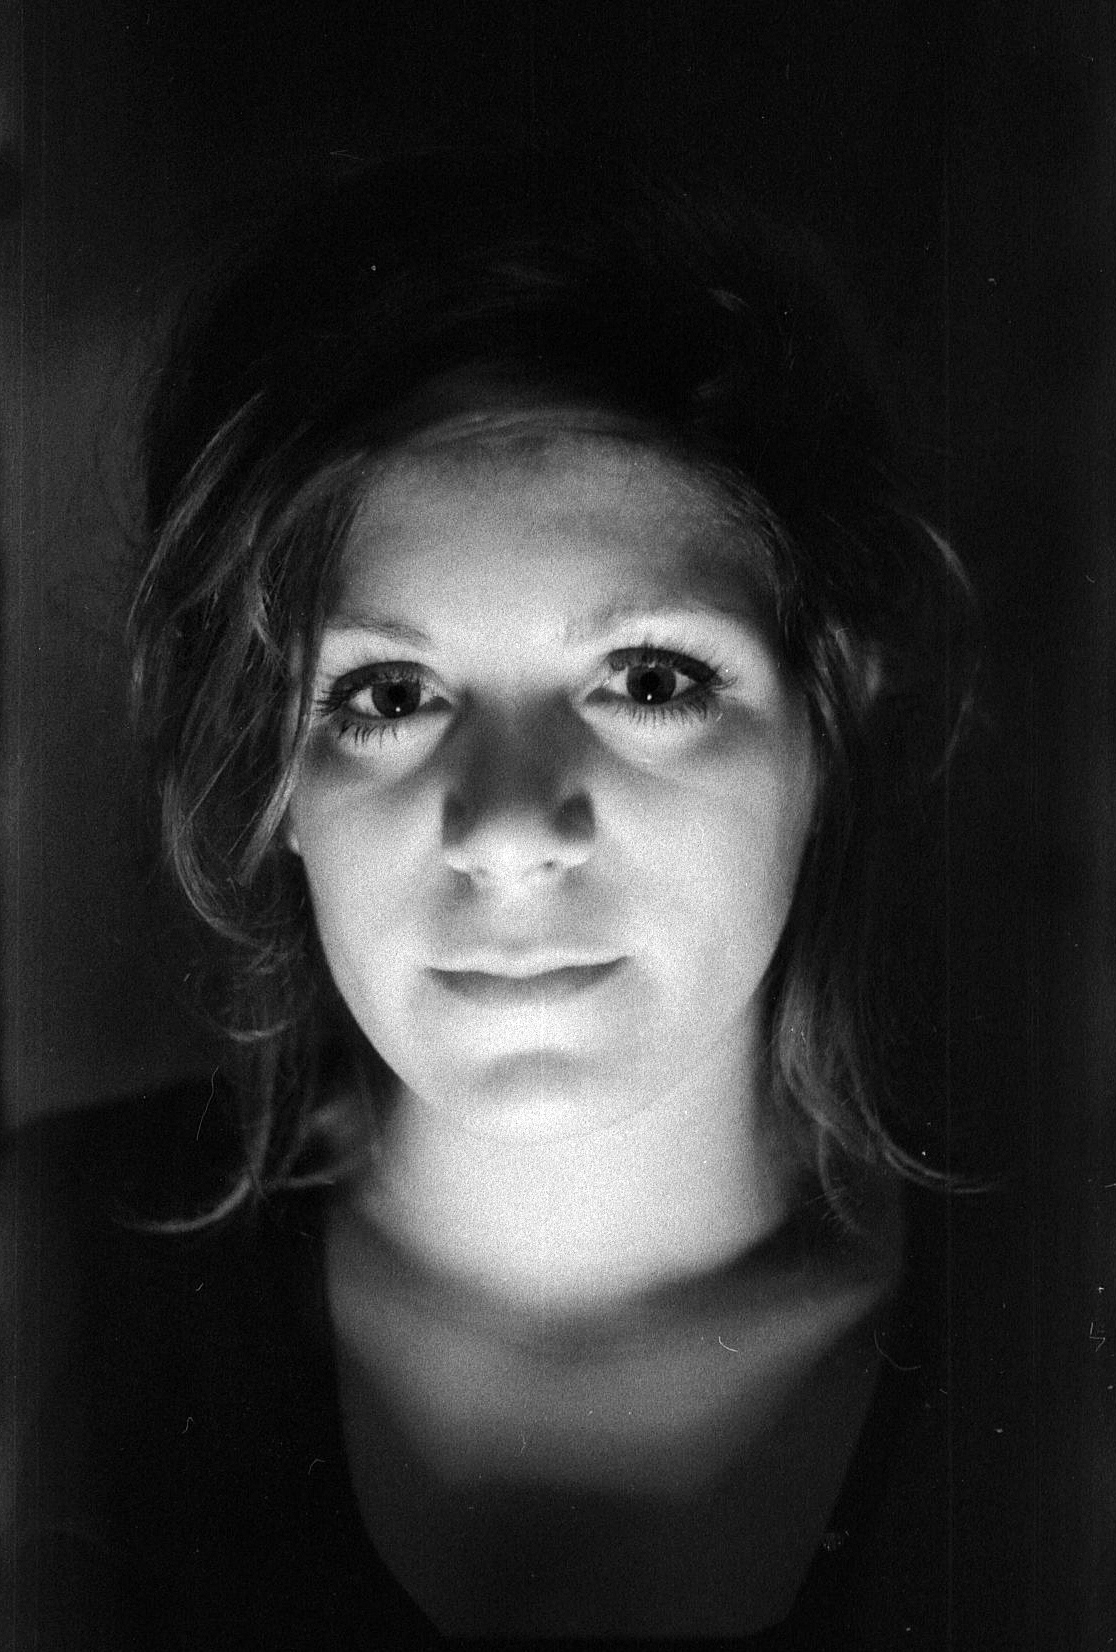 analog carl zeiss jena black and white negative portrait PRAKTICA mtl 5 1.8 50mm untitled